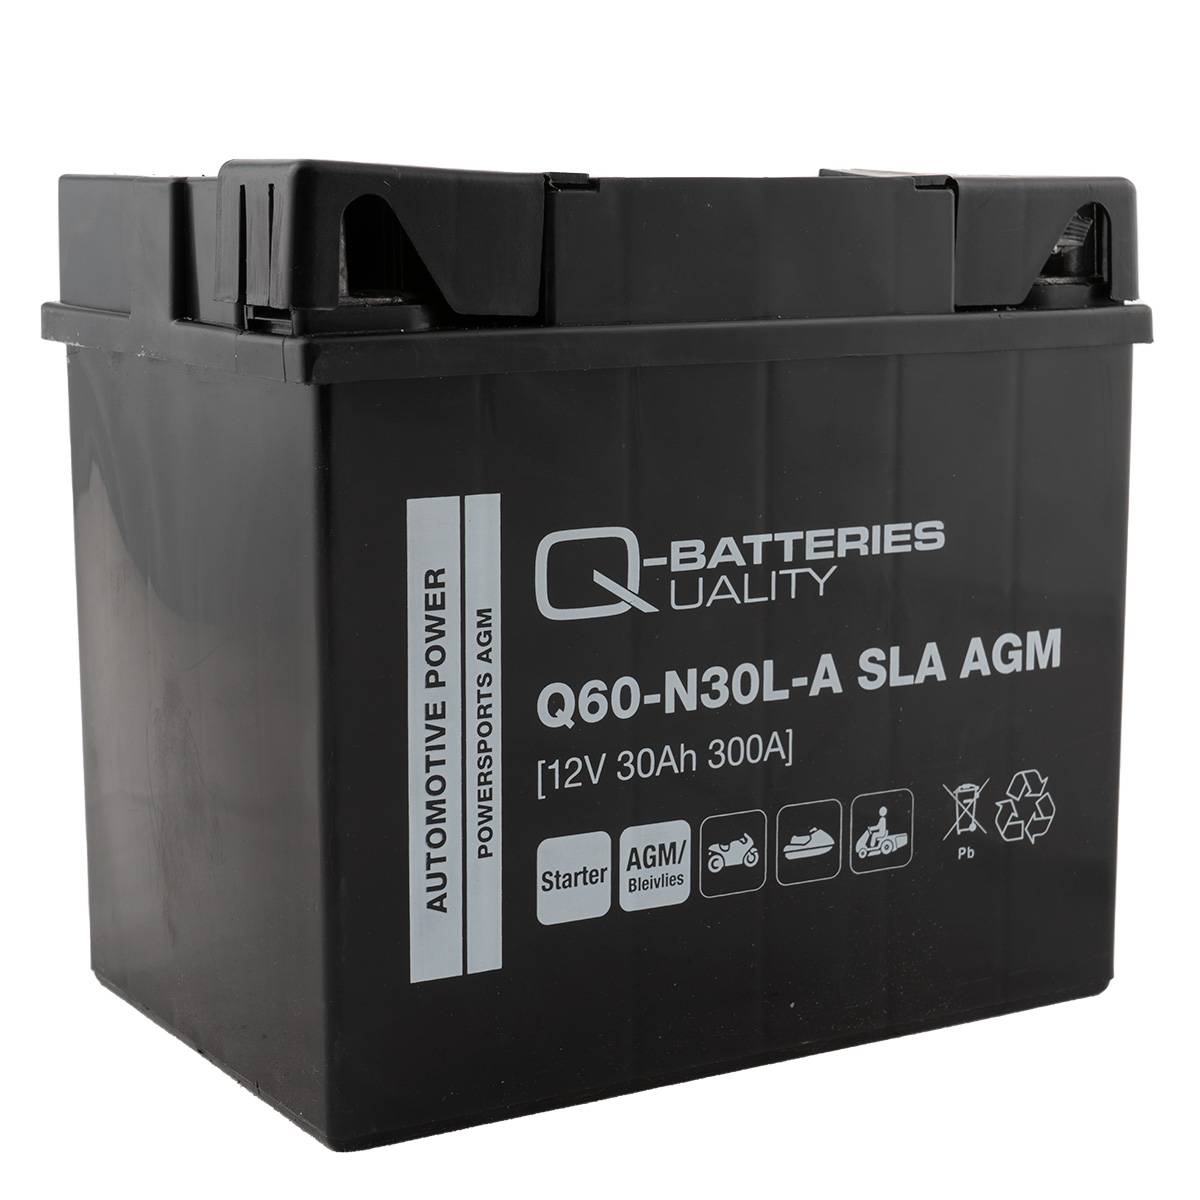 Q-Batteries Q60-N30L AGM Motorradbatterie 53030 SLA Q60-N30L-A-SLA 12V 30Ah 385A